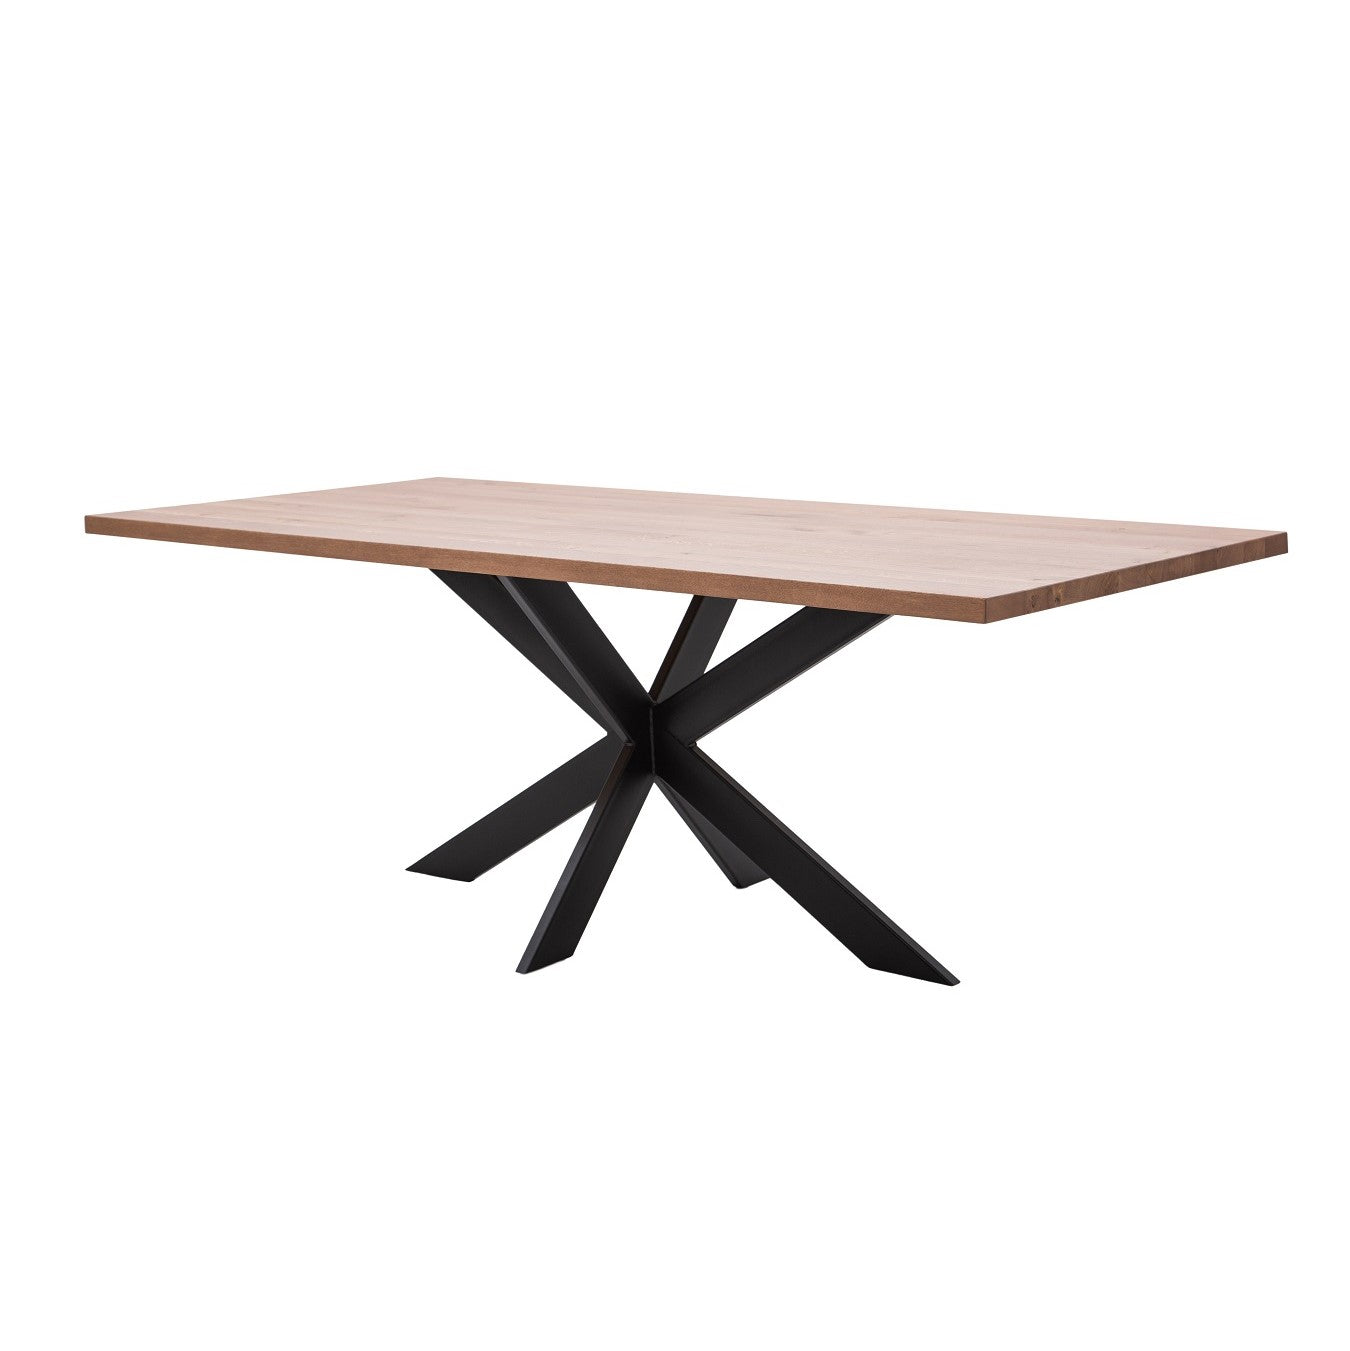 Dining room dining table made of oak steel straight edge MIKADO SLIM